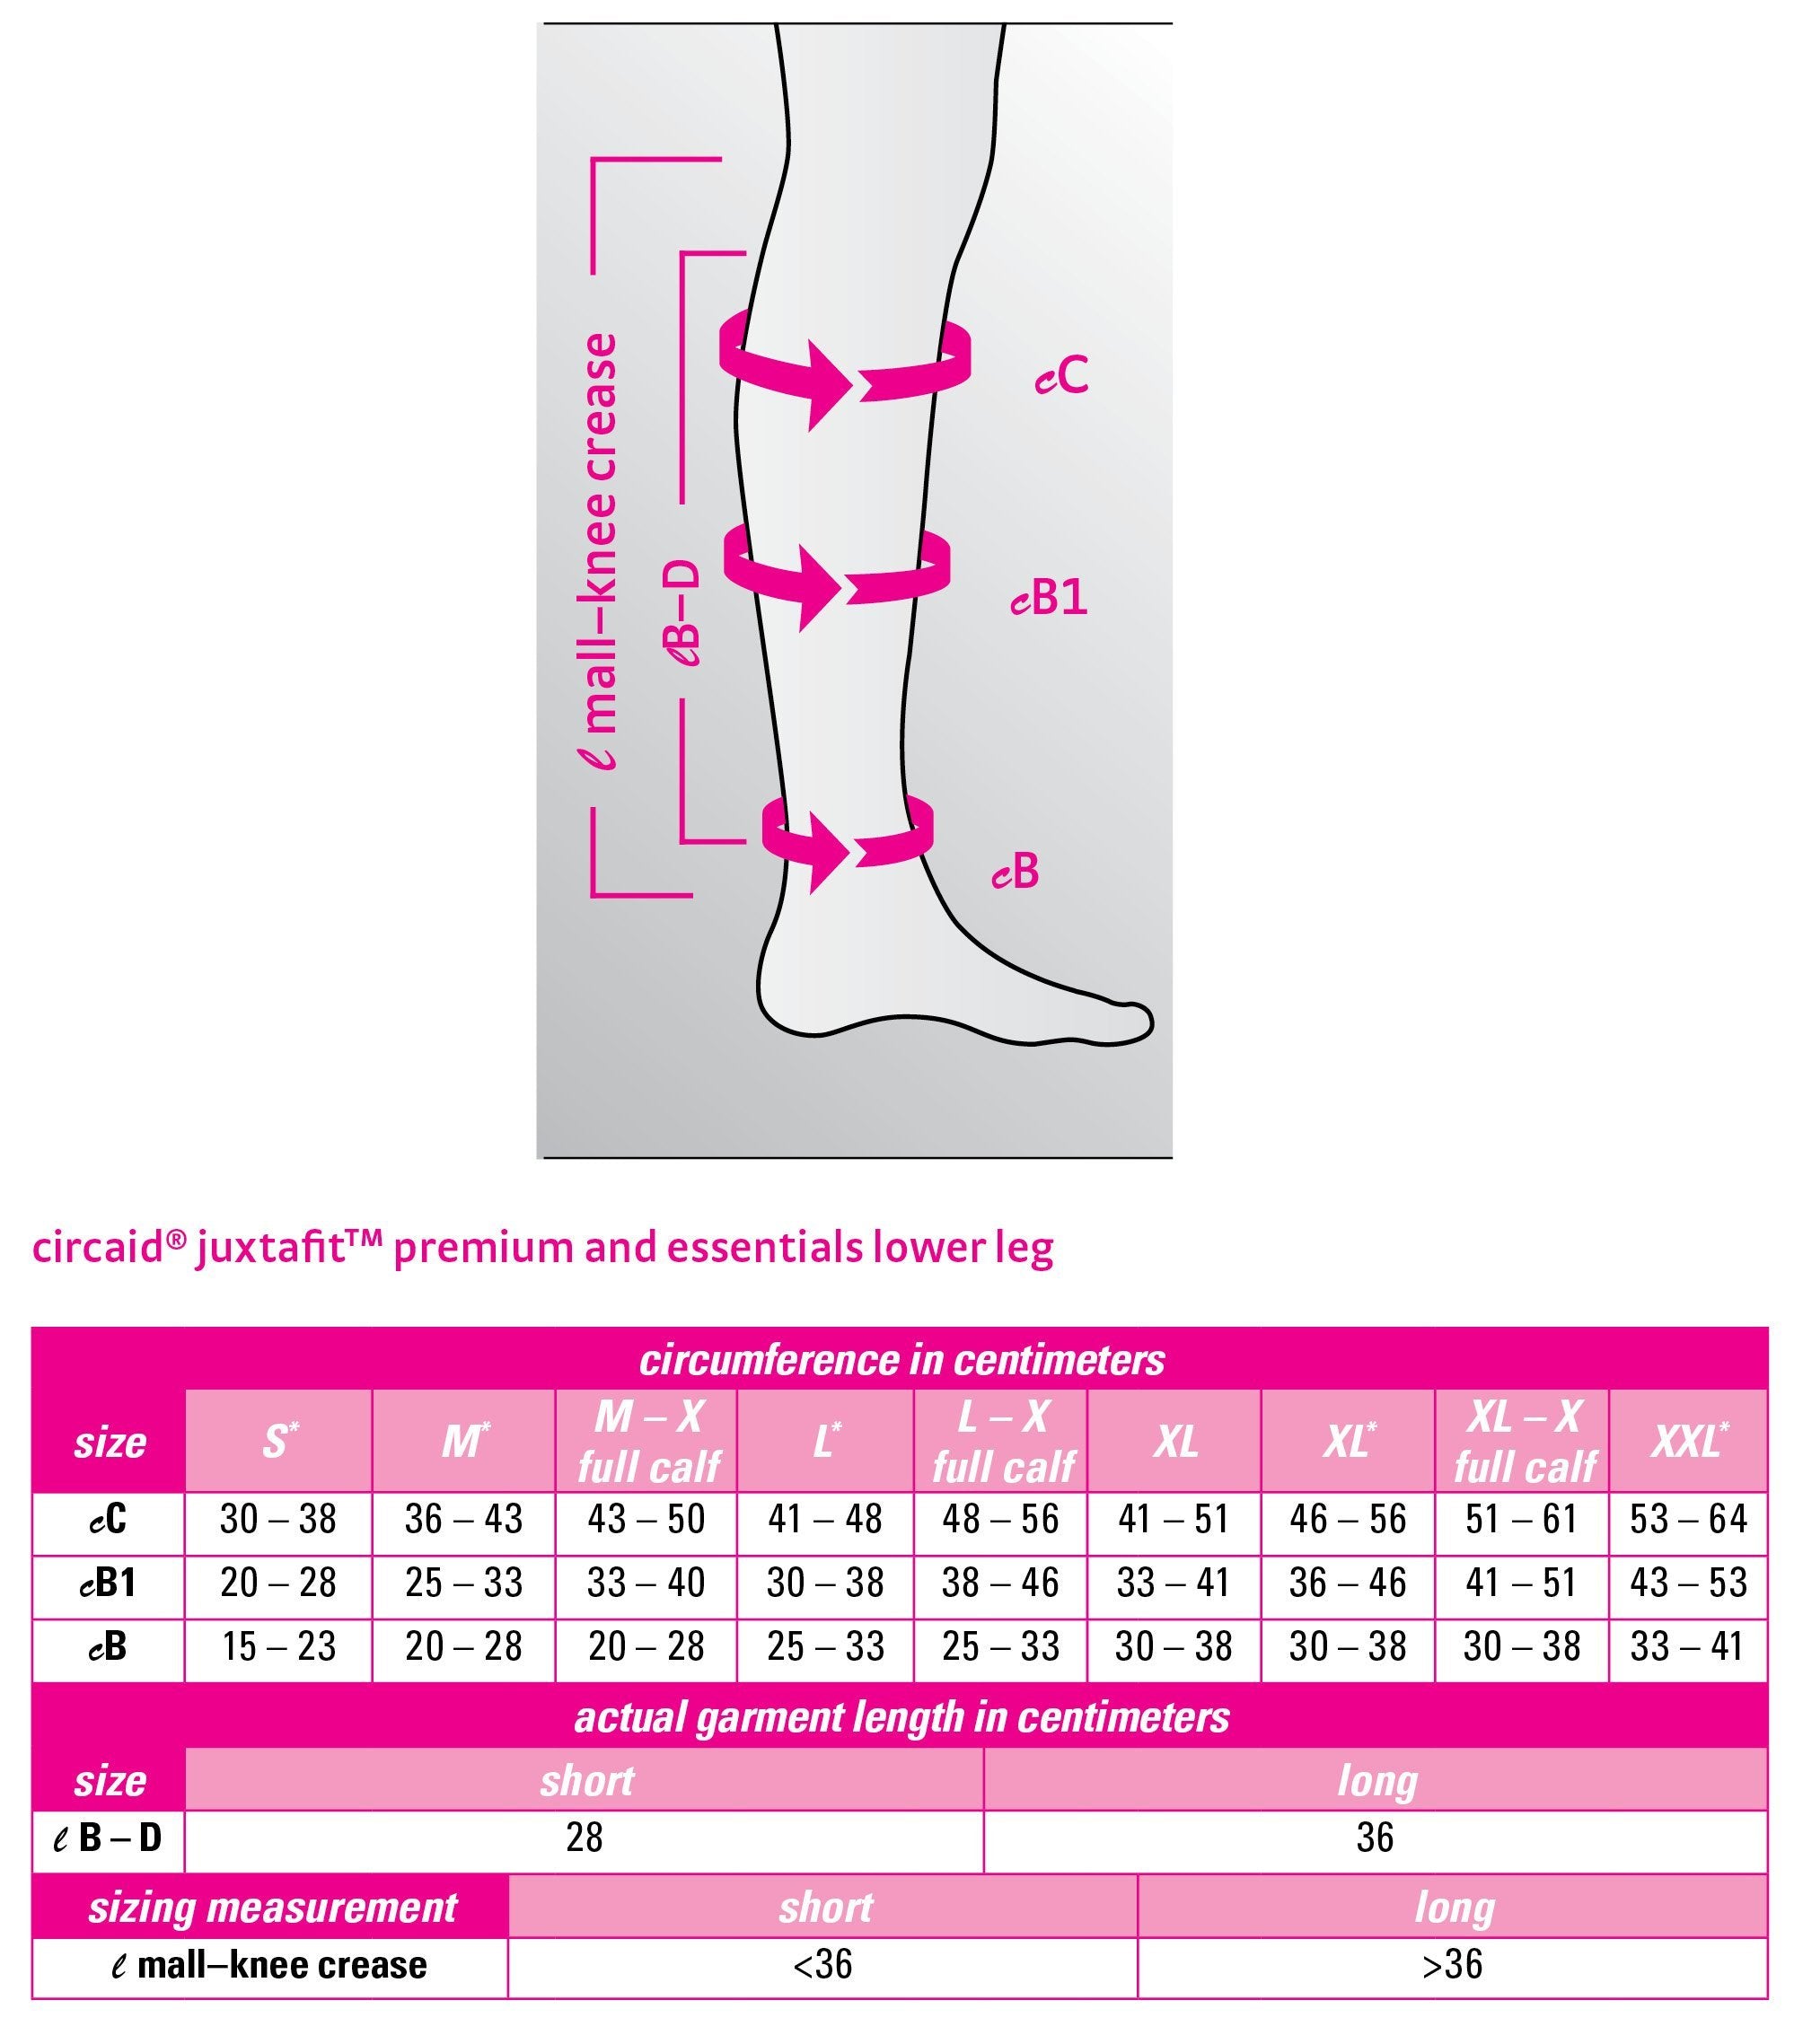 circaid juxtafit essentials compression wrap Lower Leg - All About